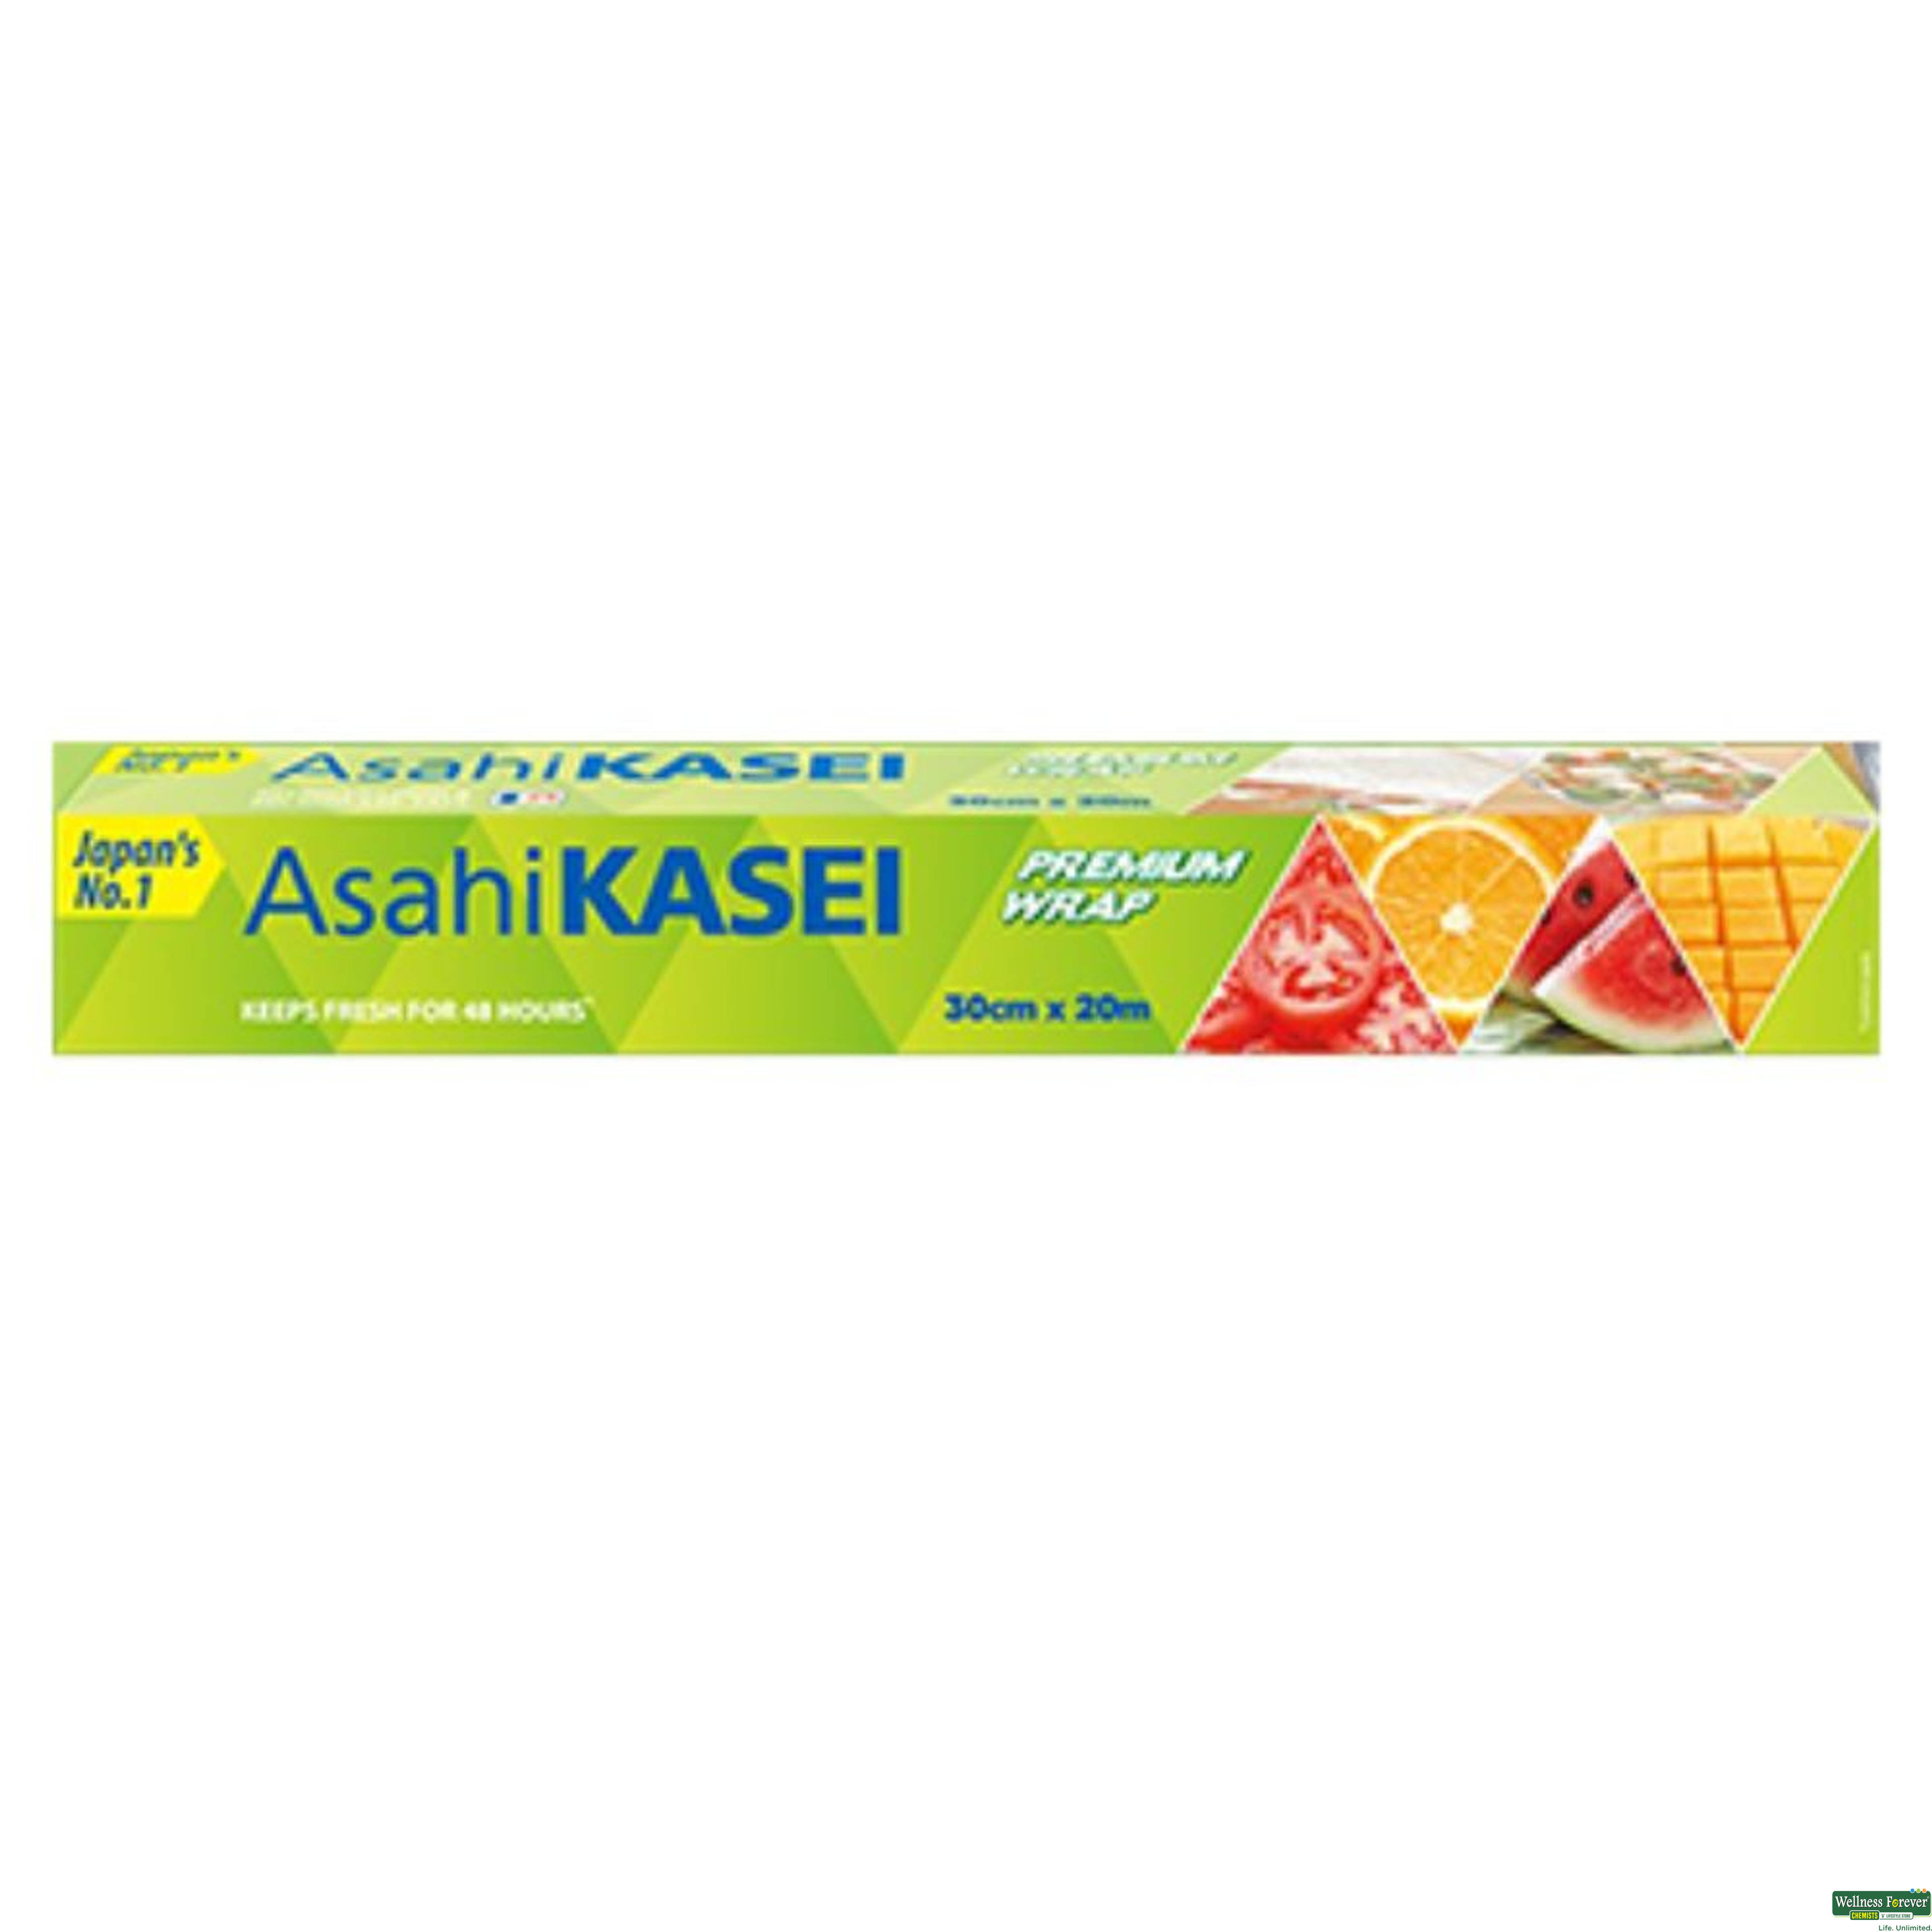 Asahi Kasei Premium Wrap 30 cm x 20 m, 1 pc-image